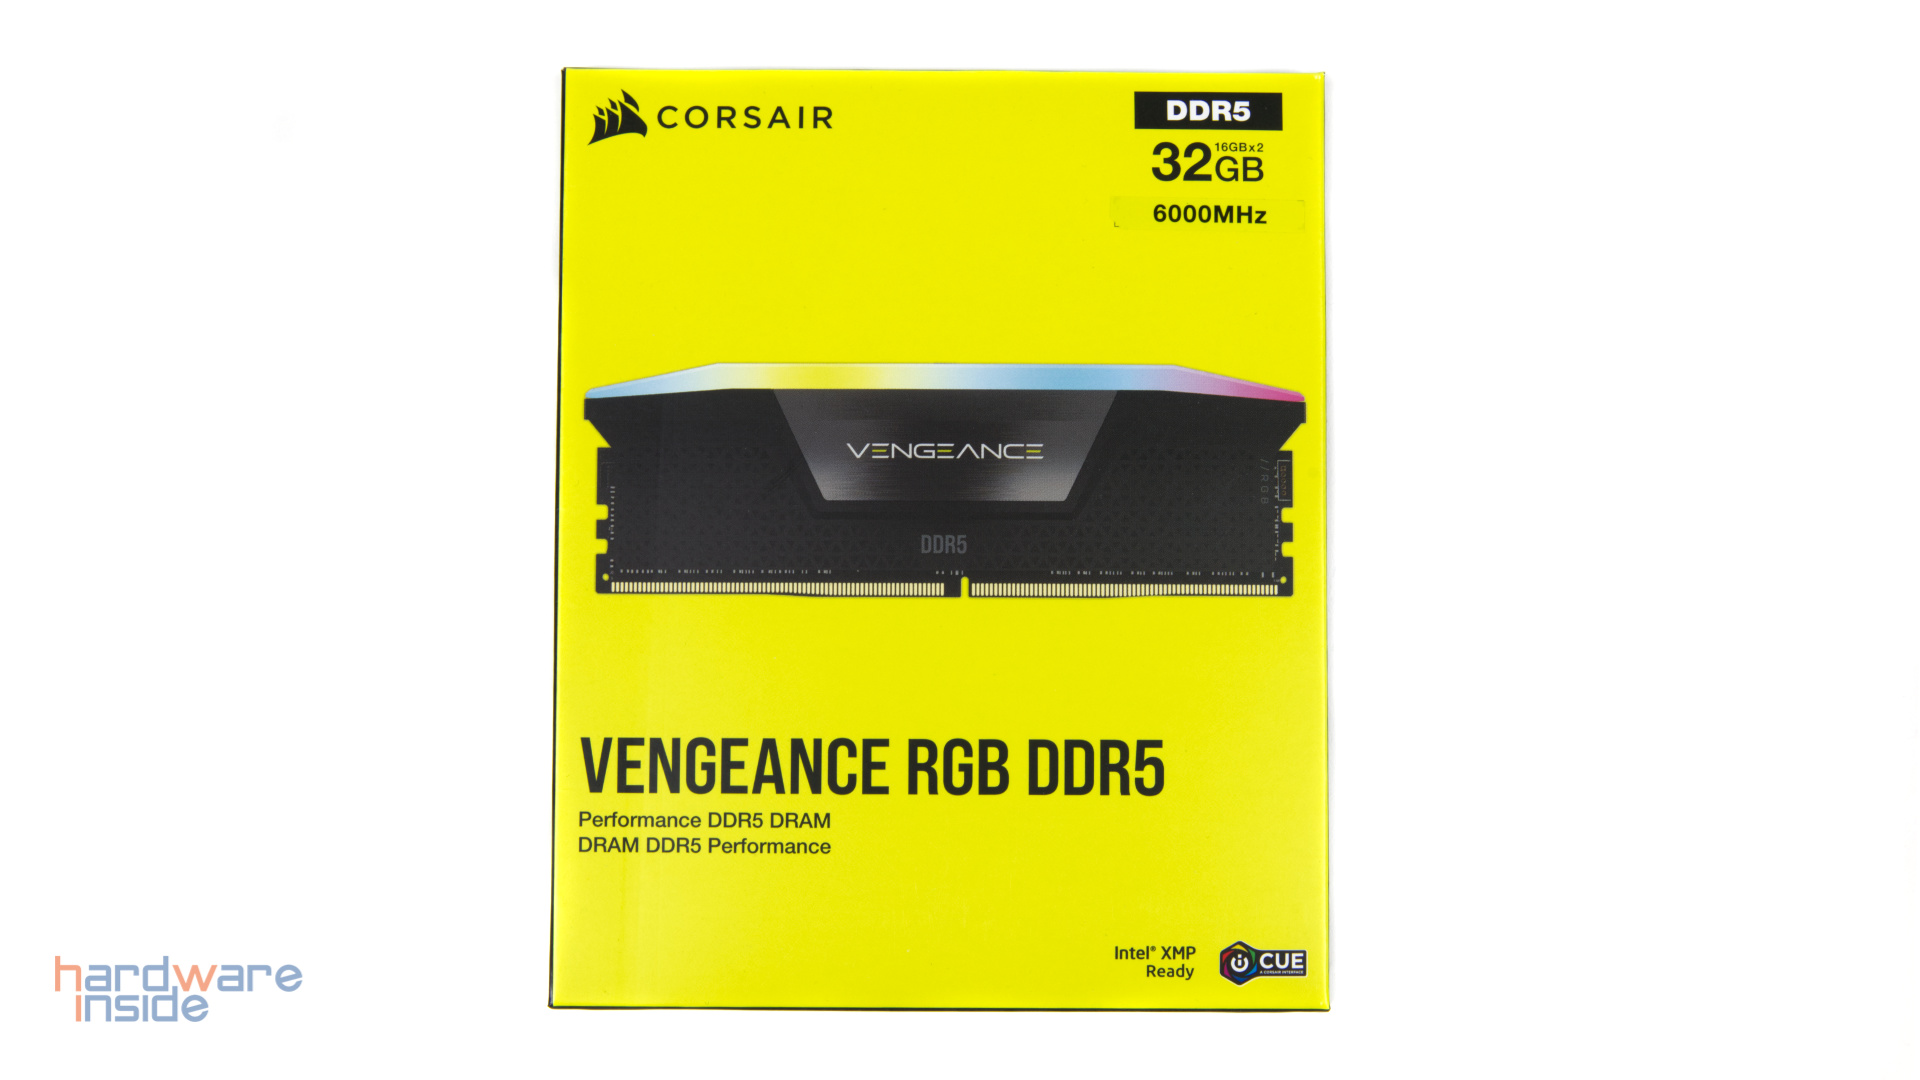 Corsair-Vengeance-RGB-DDR5-32GB-Review-1.jpg